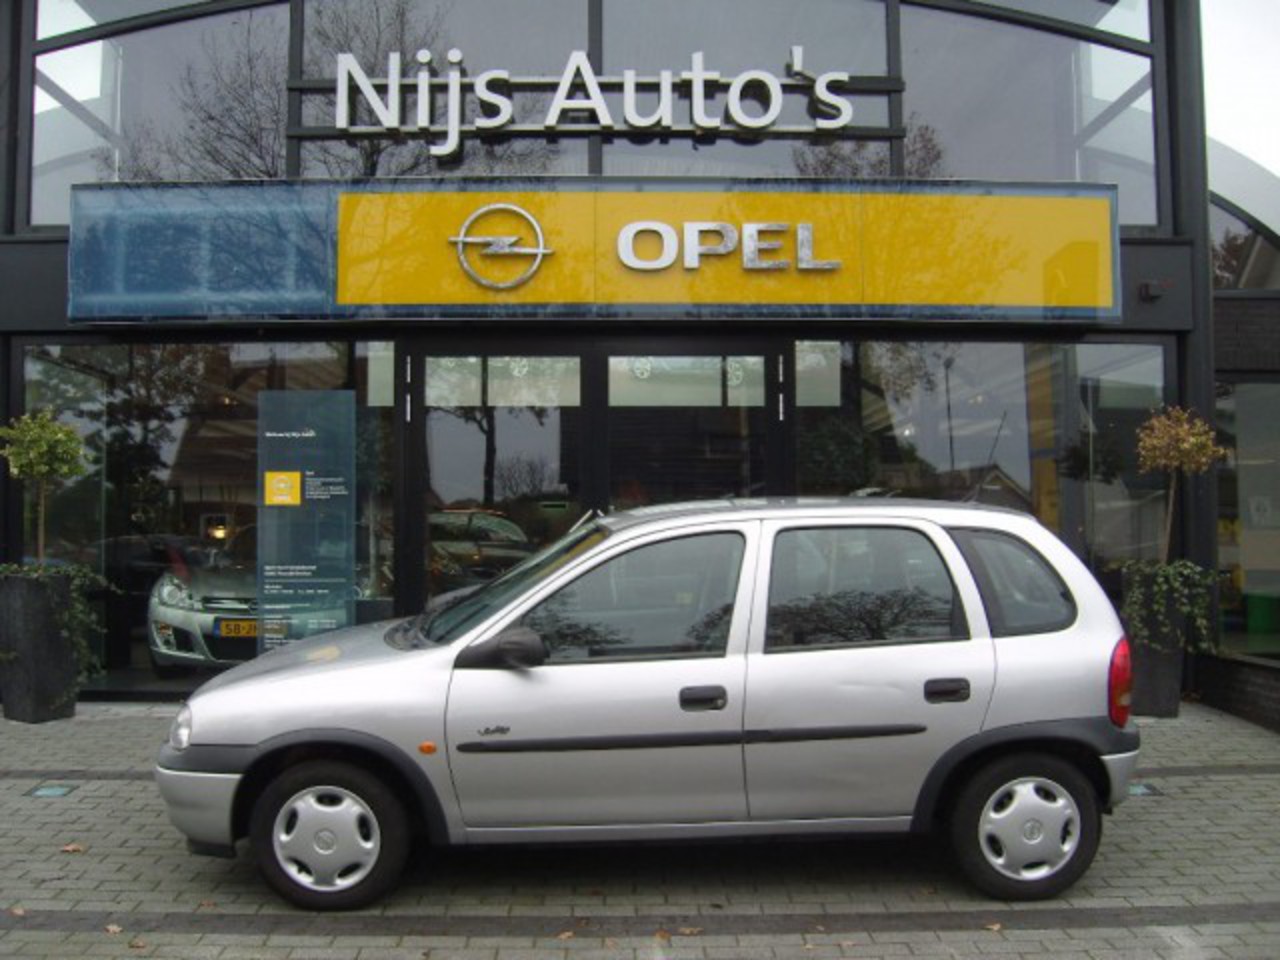 Opel Corsa 14i Swing â€” a model manufactured by Opel.